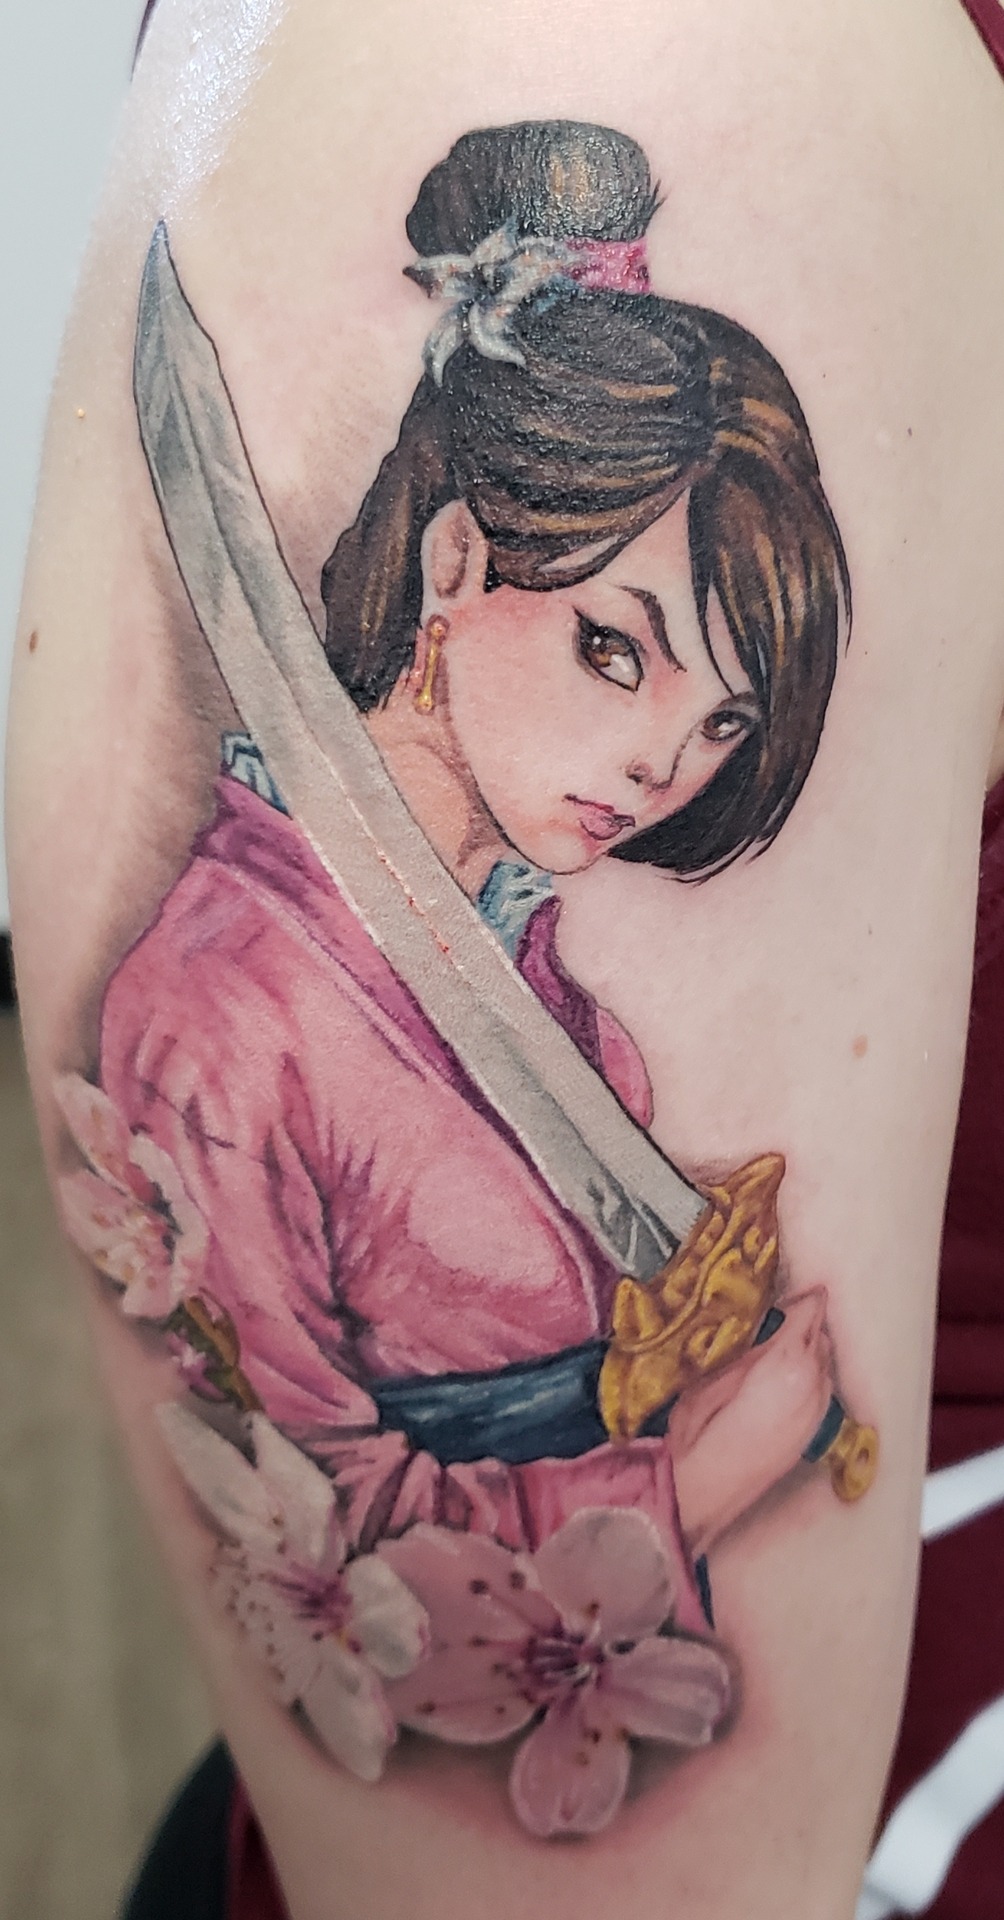 Mulan tattoo by Matt Wood at Anchored Ink in... - INKPEDIA